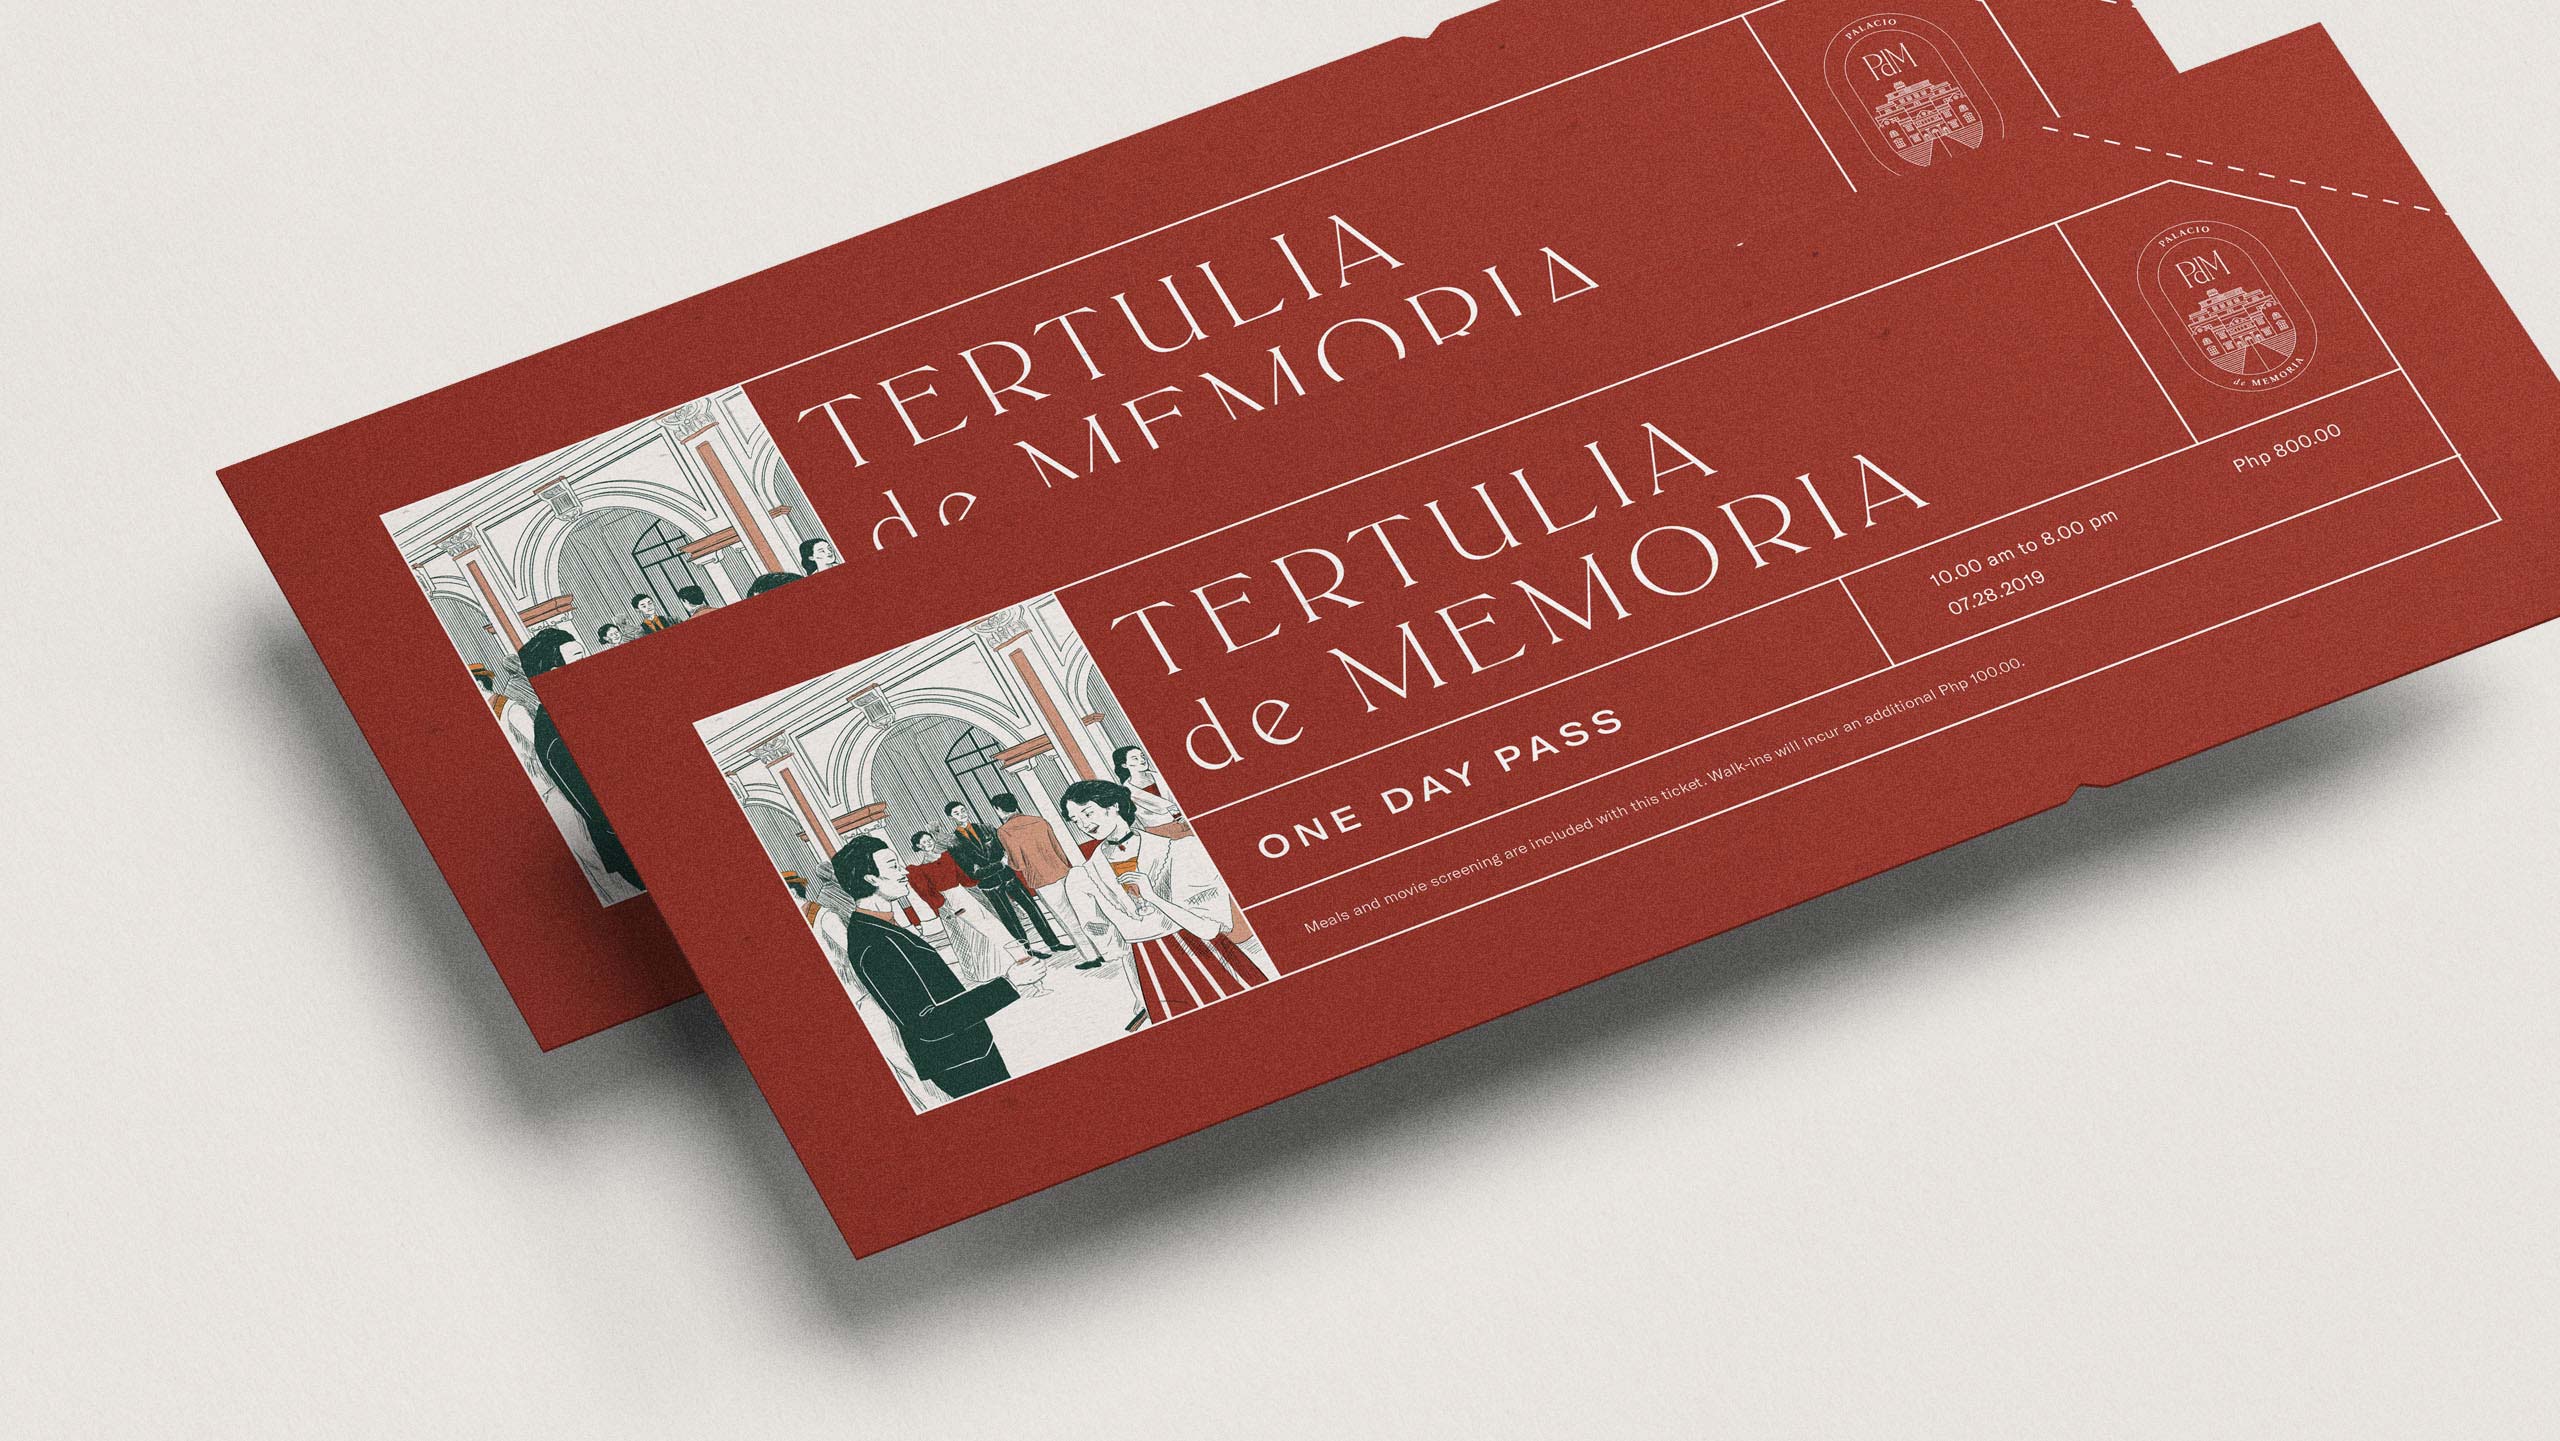 Branded event tickets designed for culture and events venue Palacio de Memoria